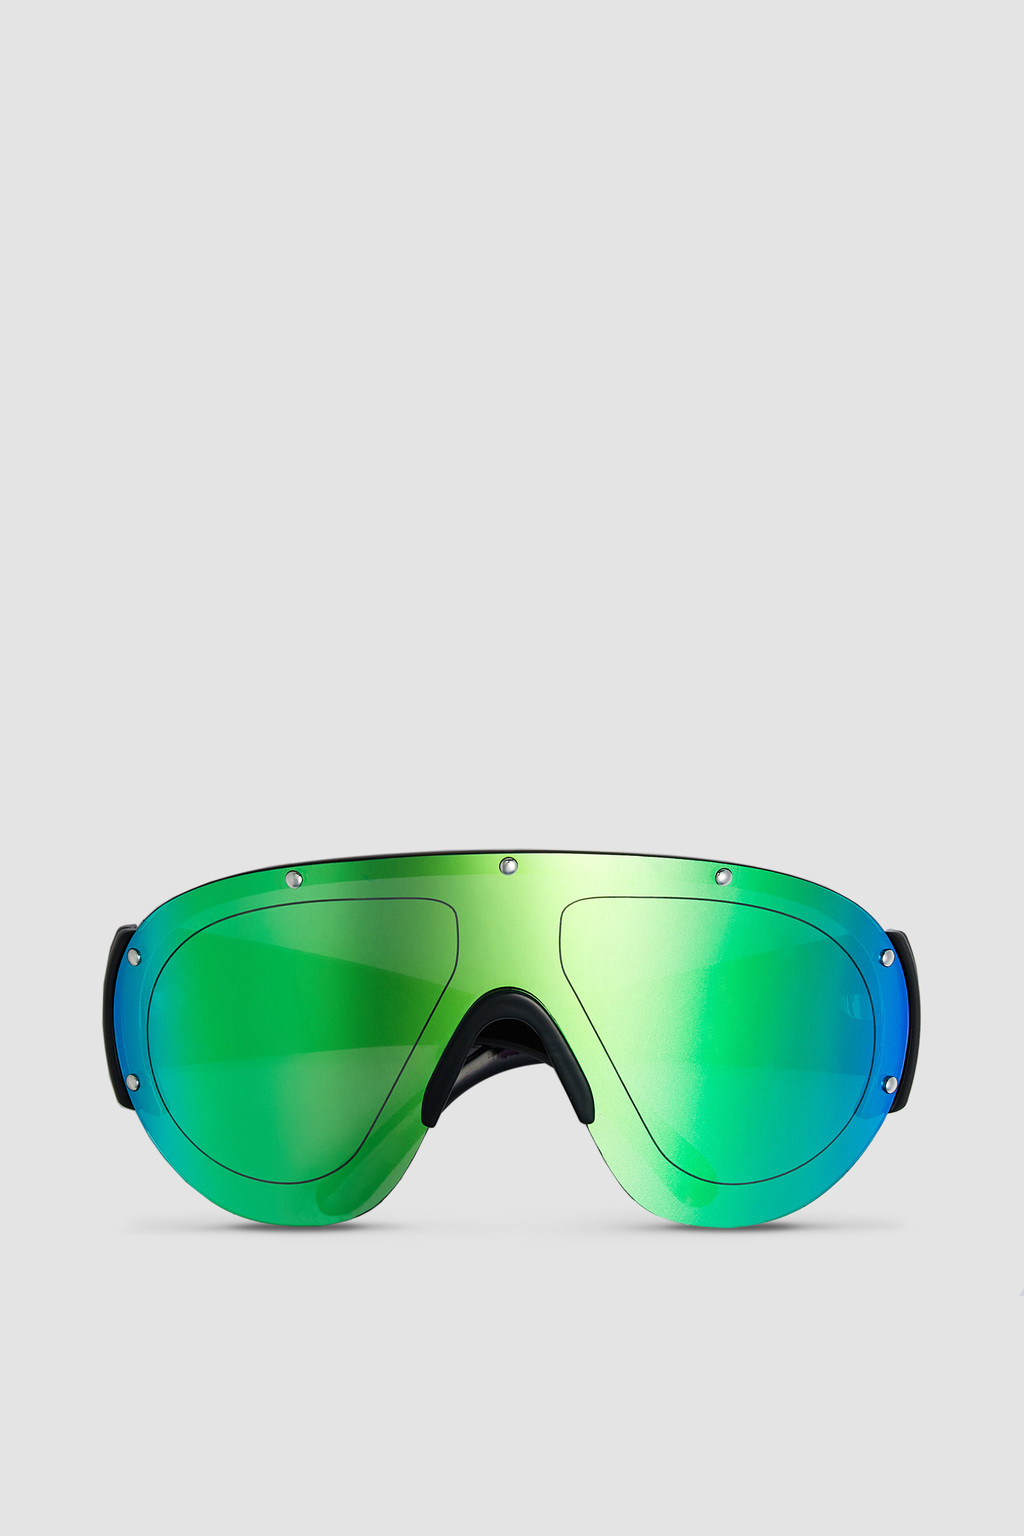 Best rectangular and square sunglasses for men | OPUMO Magazine